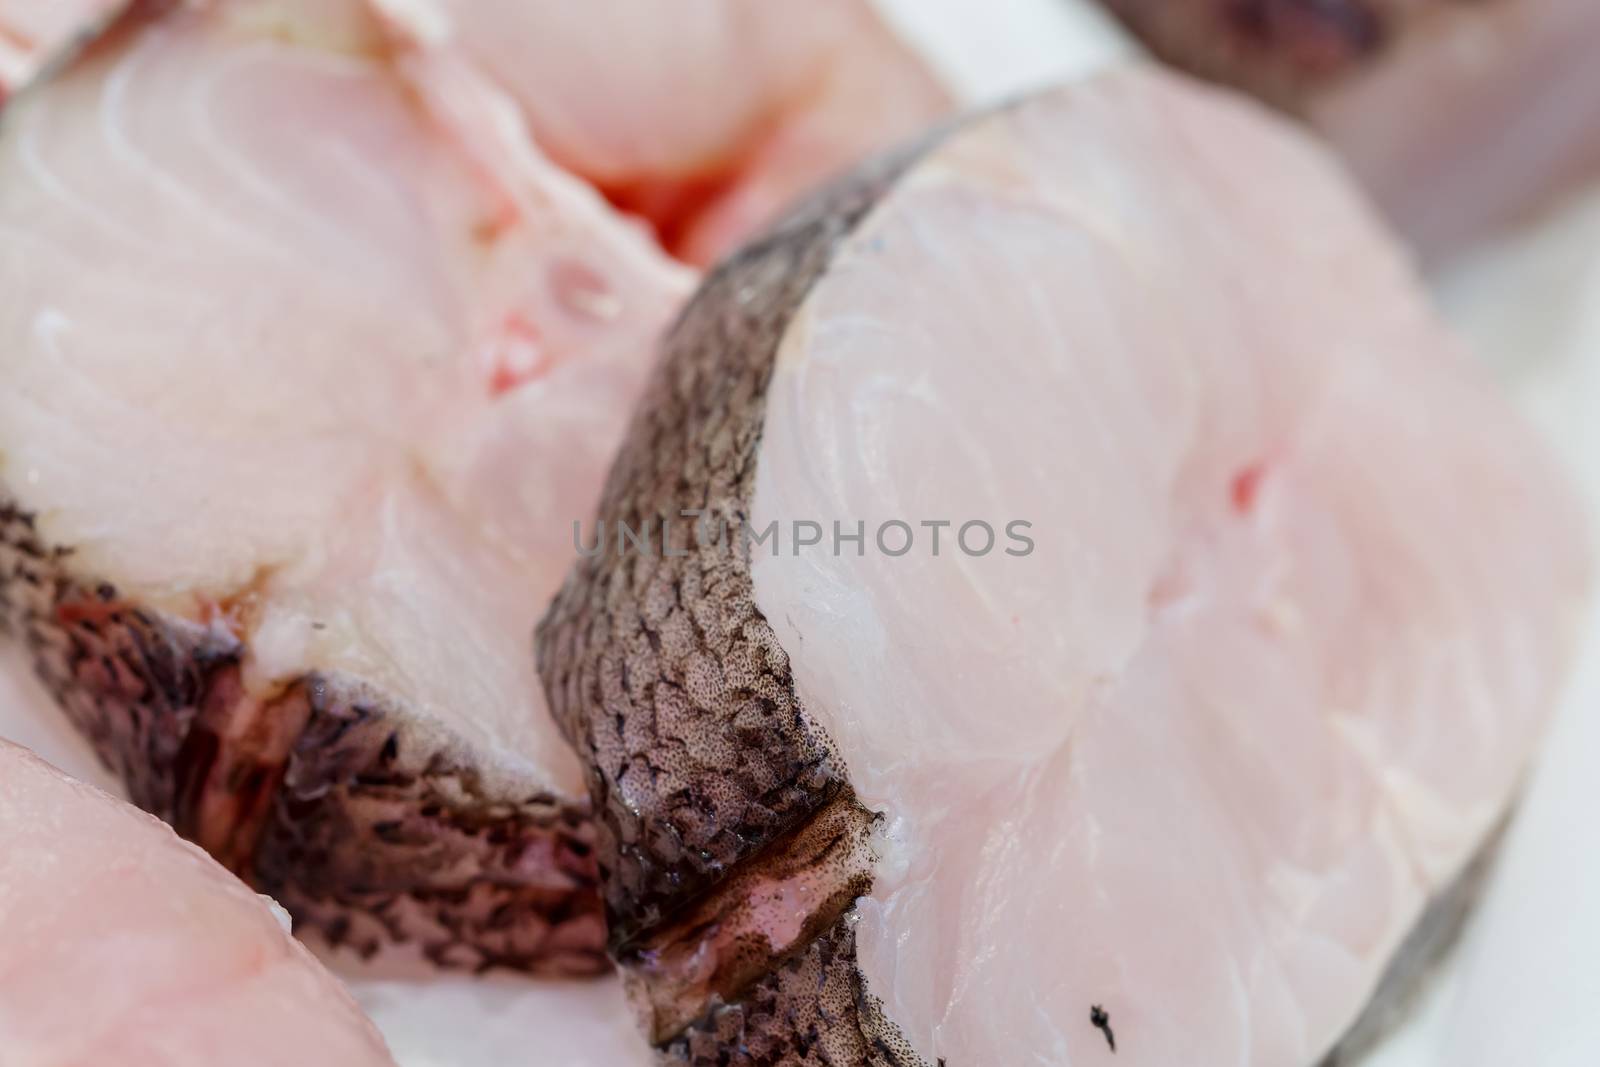 fresh pieces of hake on showcase of seafood market